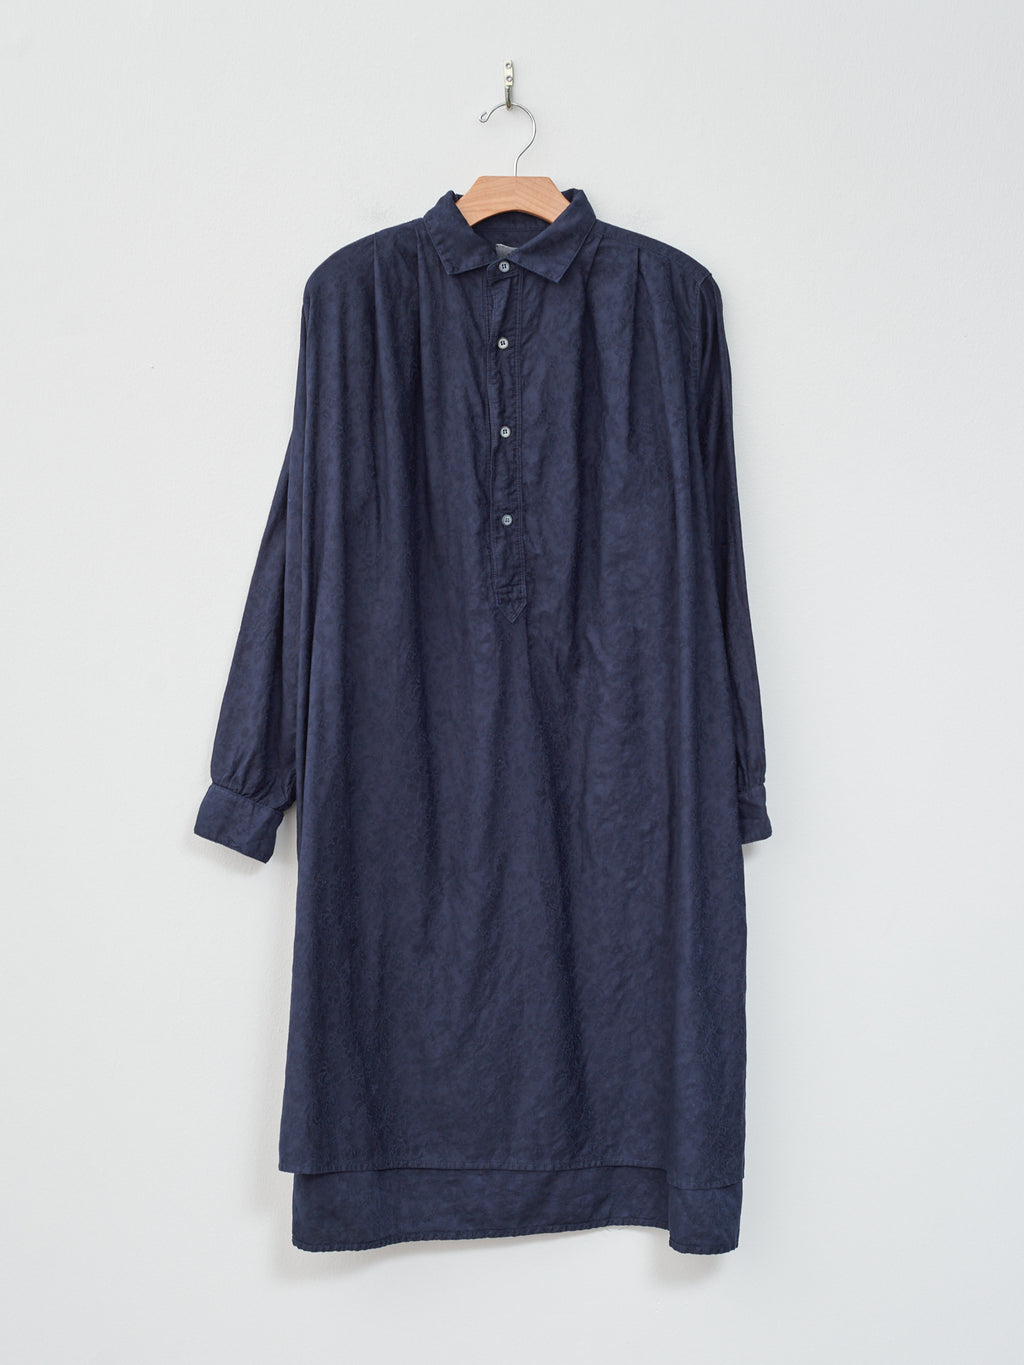 Namu Shop - Ichi Antiquites Azumadaki Vintage French Cotton Pullover Shirt - Navy